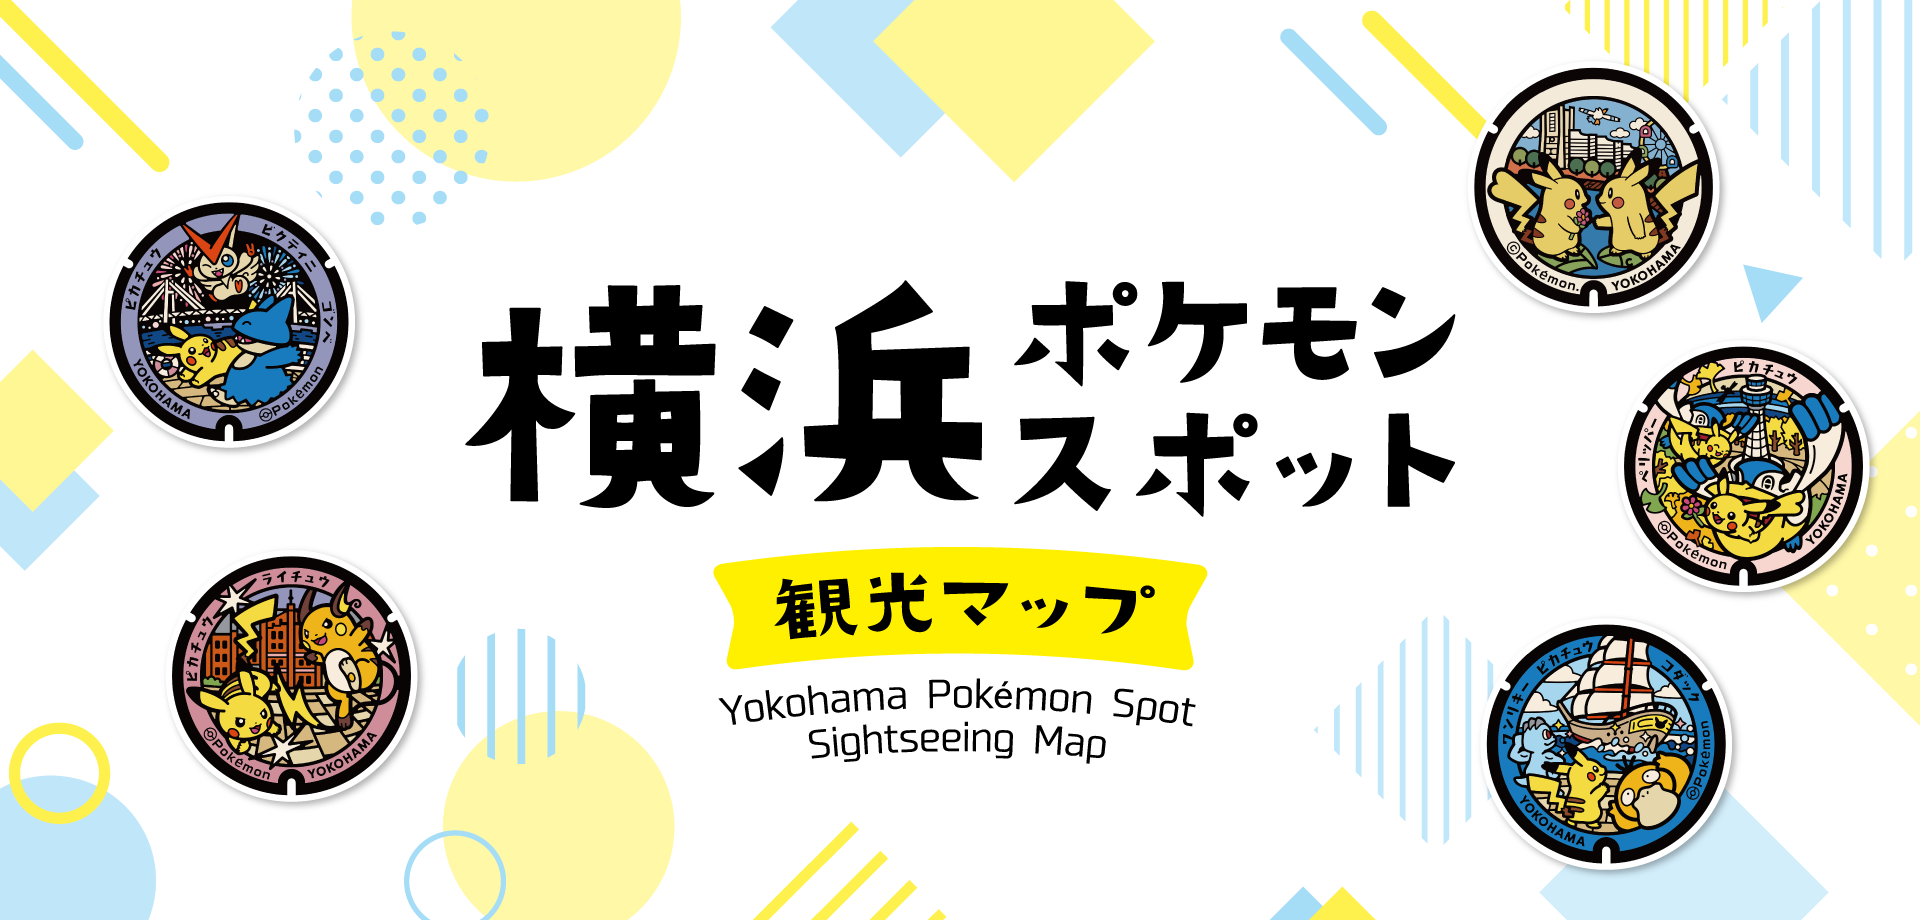 Carte touristique Yokohama Pokémon Spot